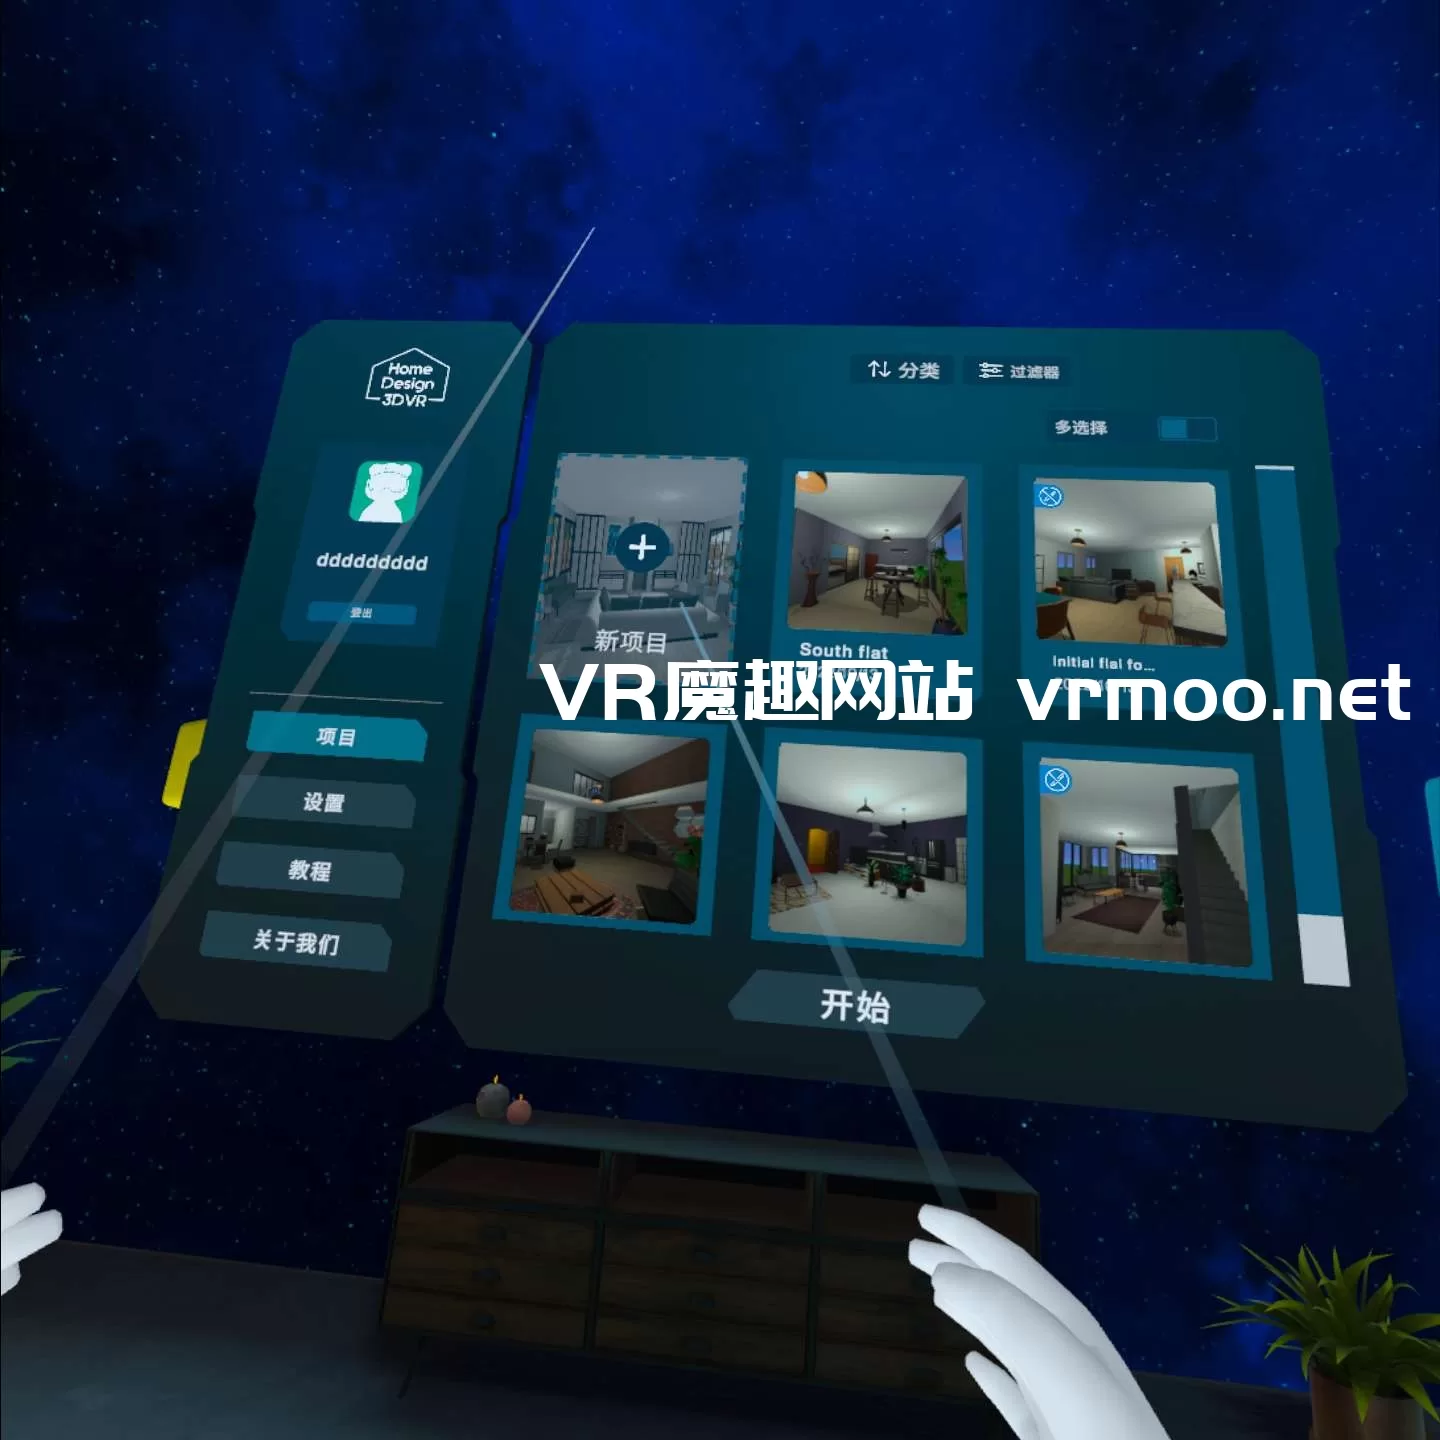 Oculus Quest 游戏《家居设计 3D VR汉化中文版》Home Design 3D VR